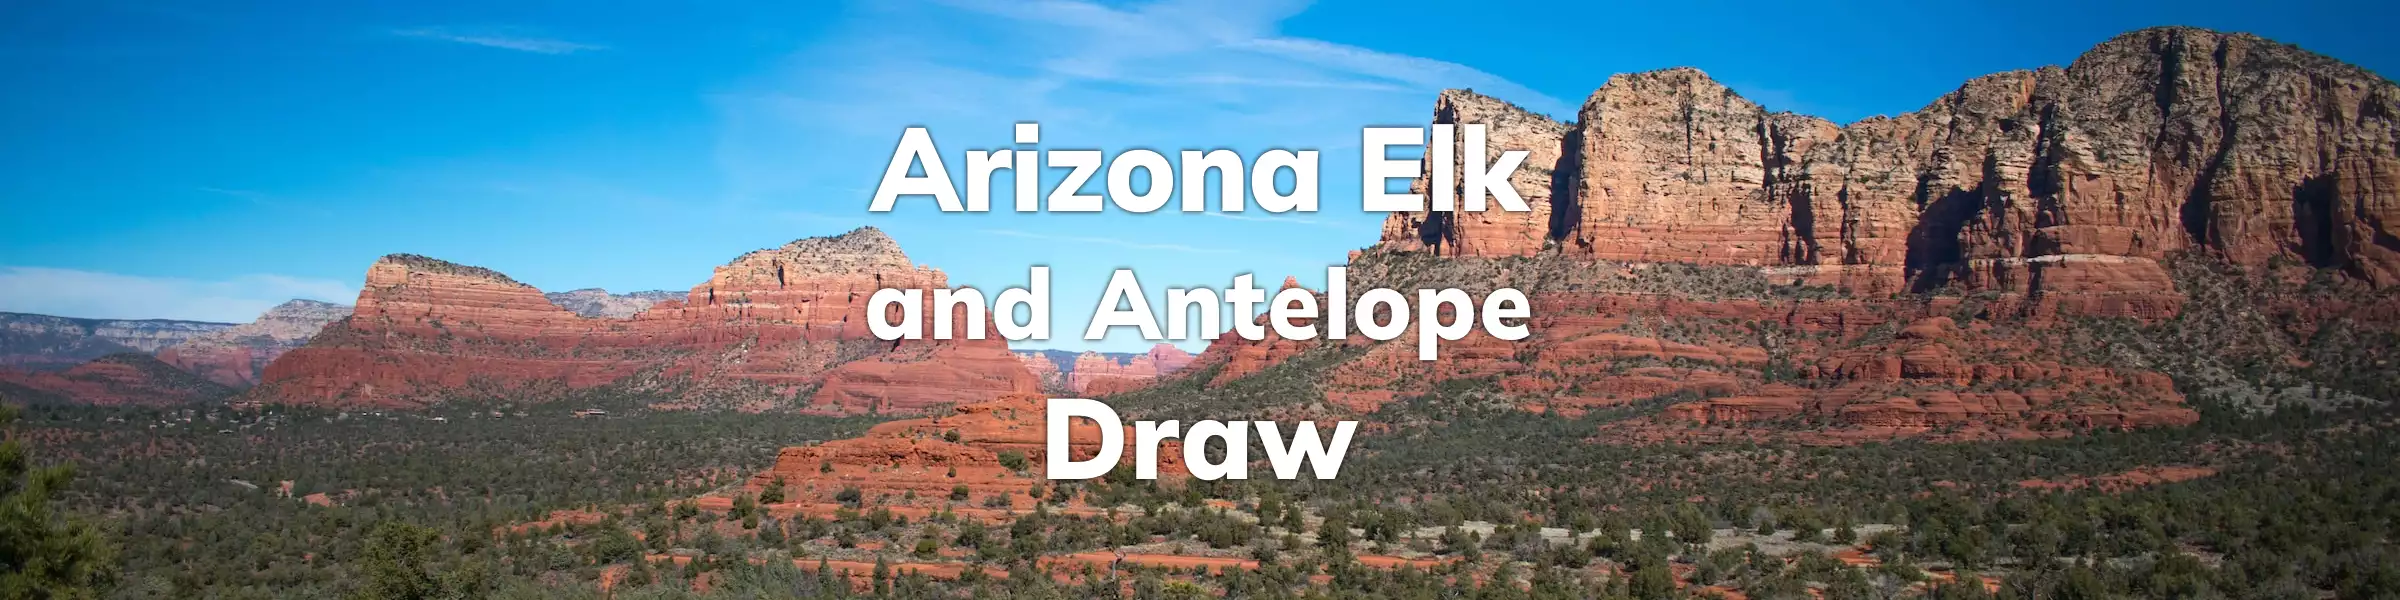 Arizona Elk Antelope Draw